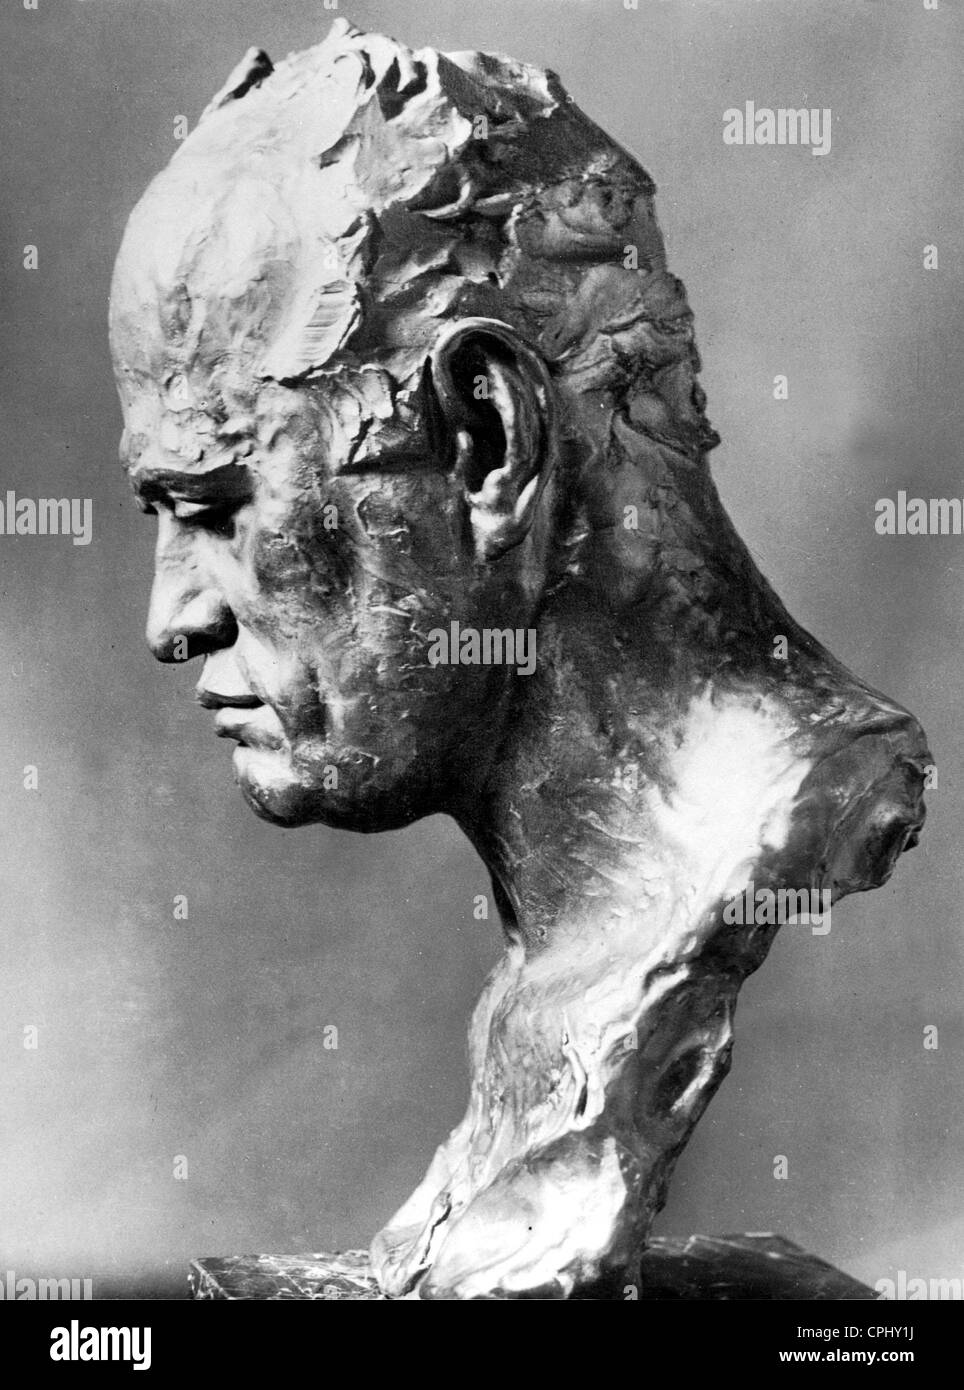 Bronze bust of Benito Mussolini Stock Photo